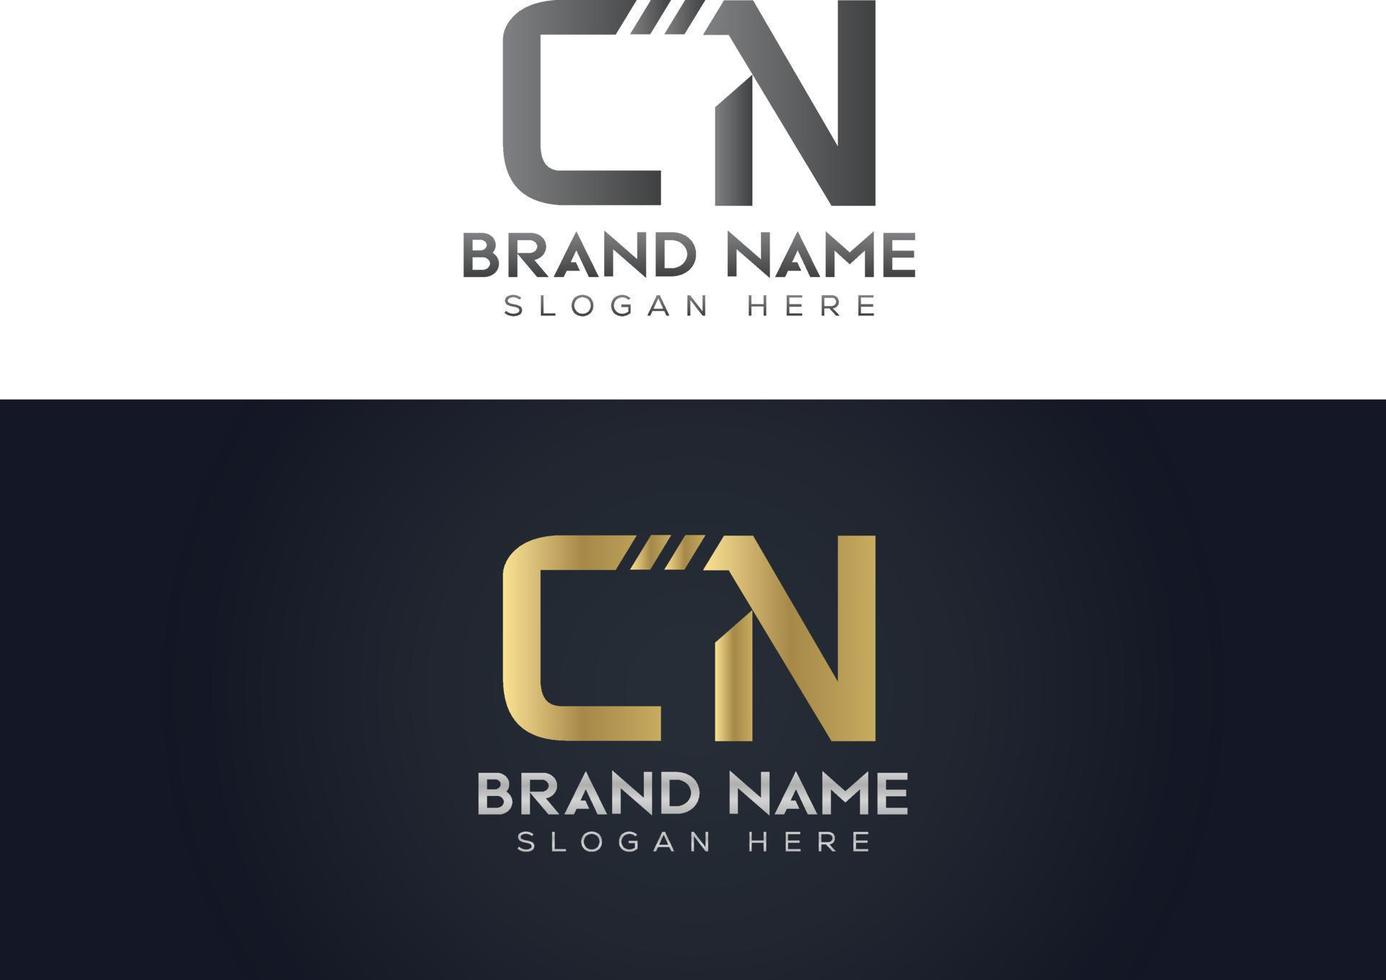 Letter C N typography vector logo design